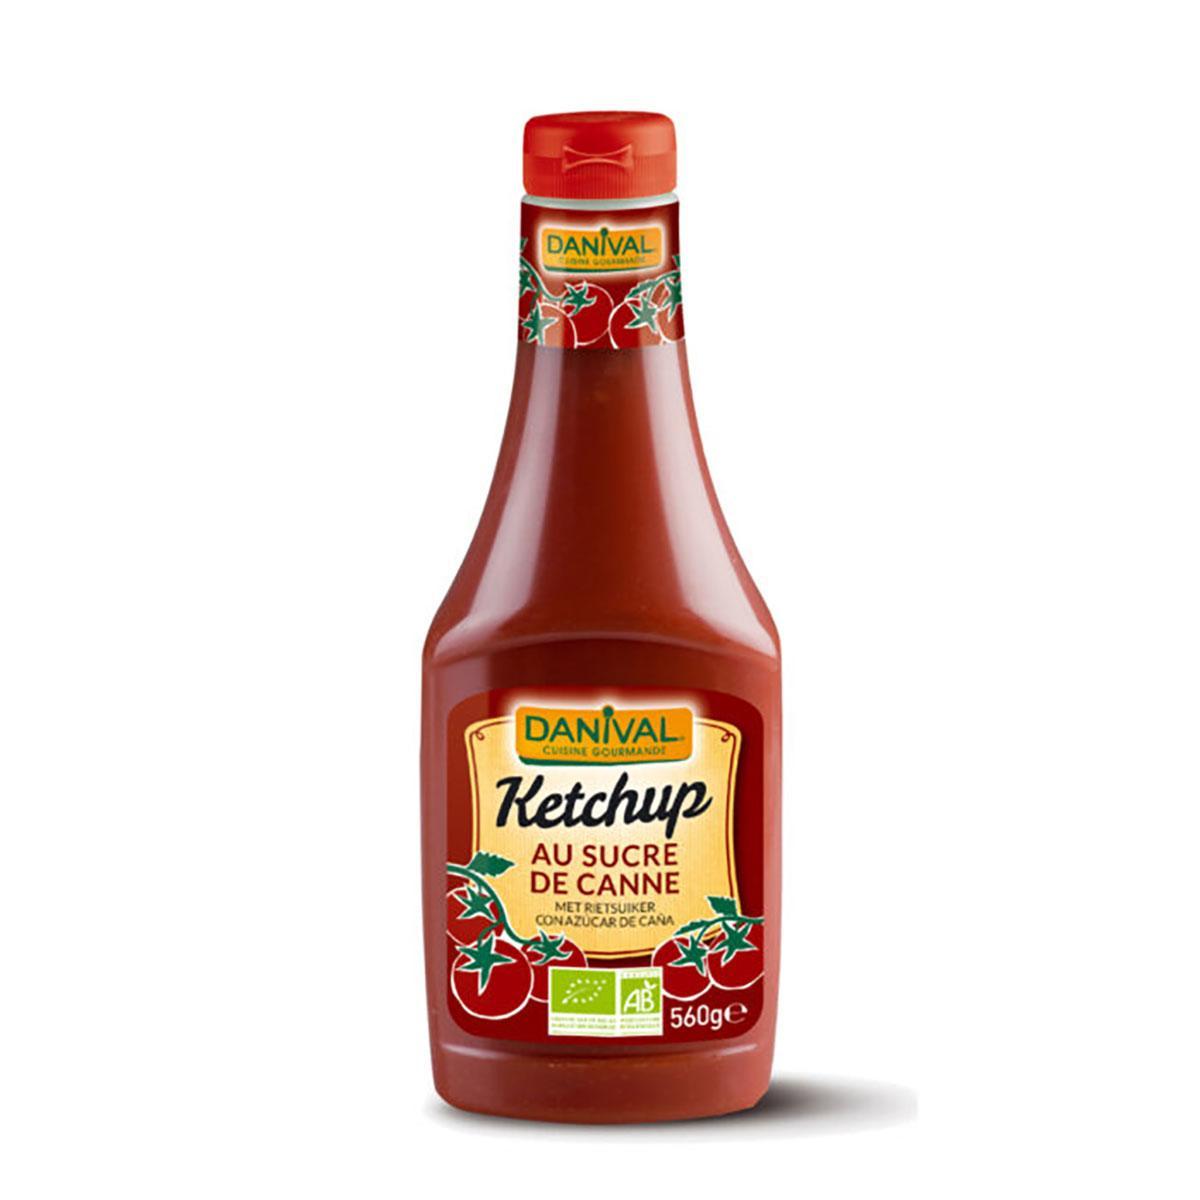 Ketchup Danival from Biodynamiska Produkter